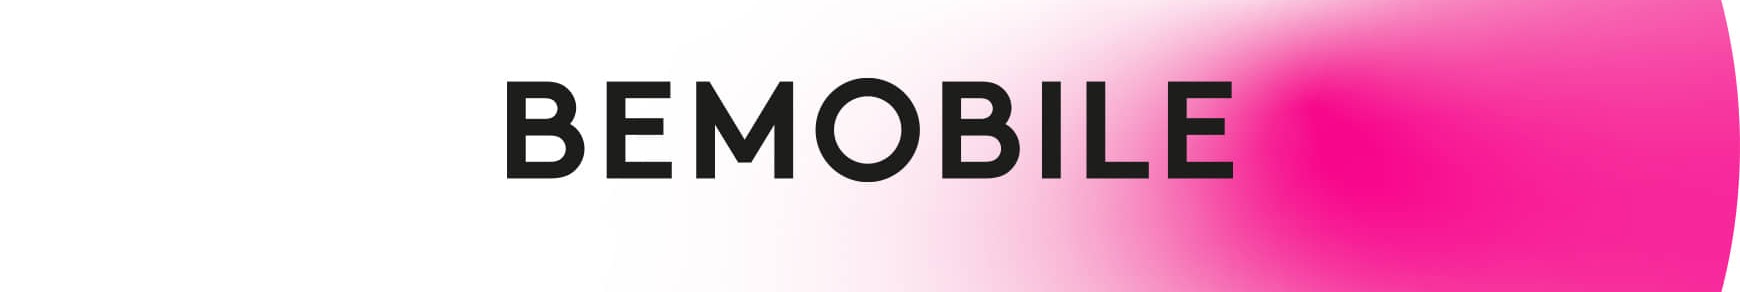 BeMobile background